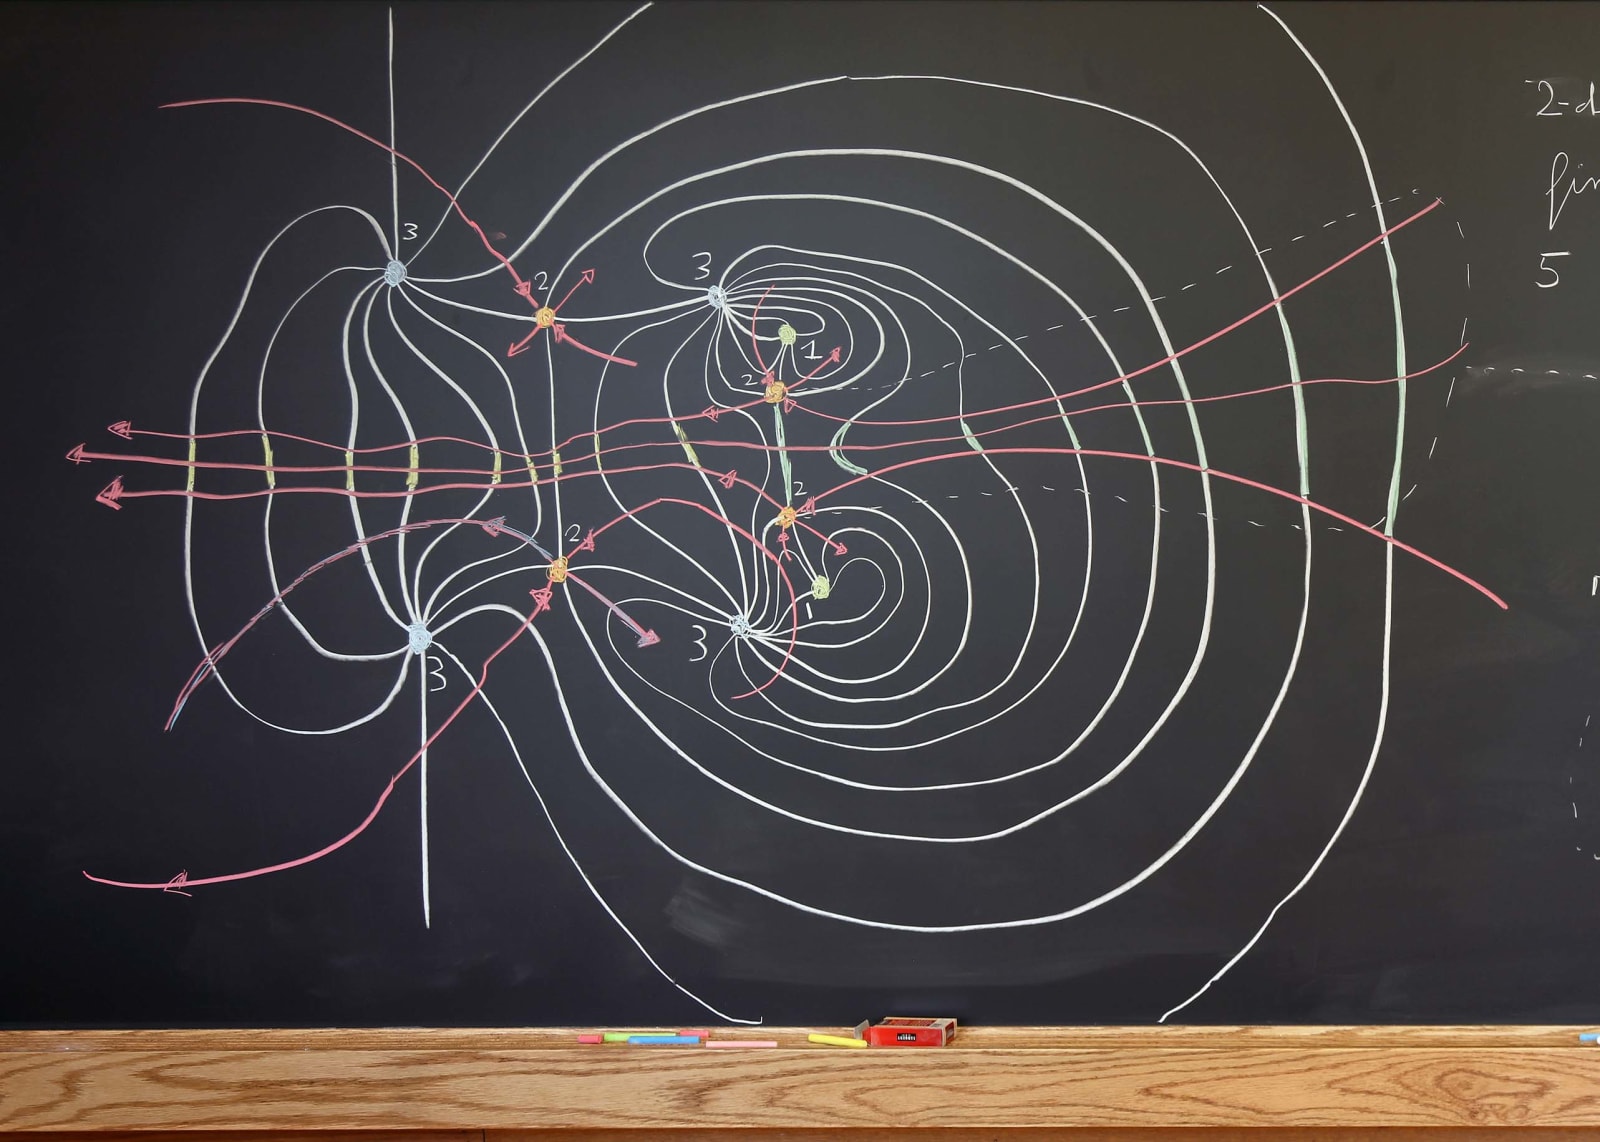 Formulas on chalkboard by mathematician Helmut Hofer, from t